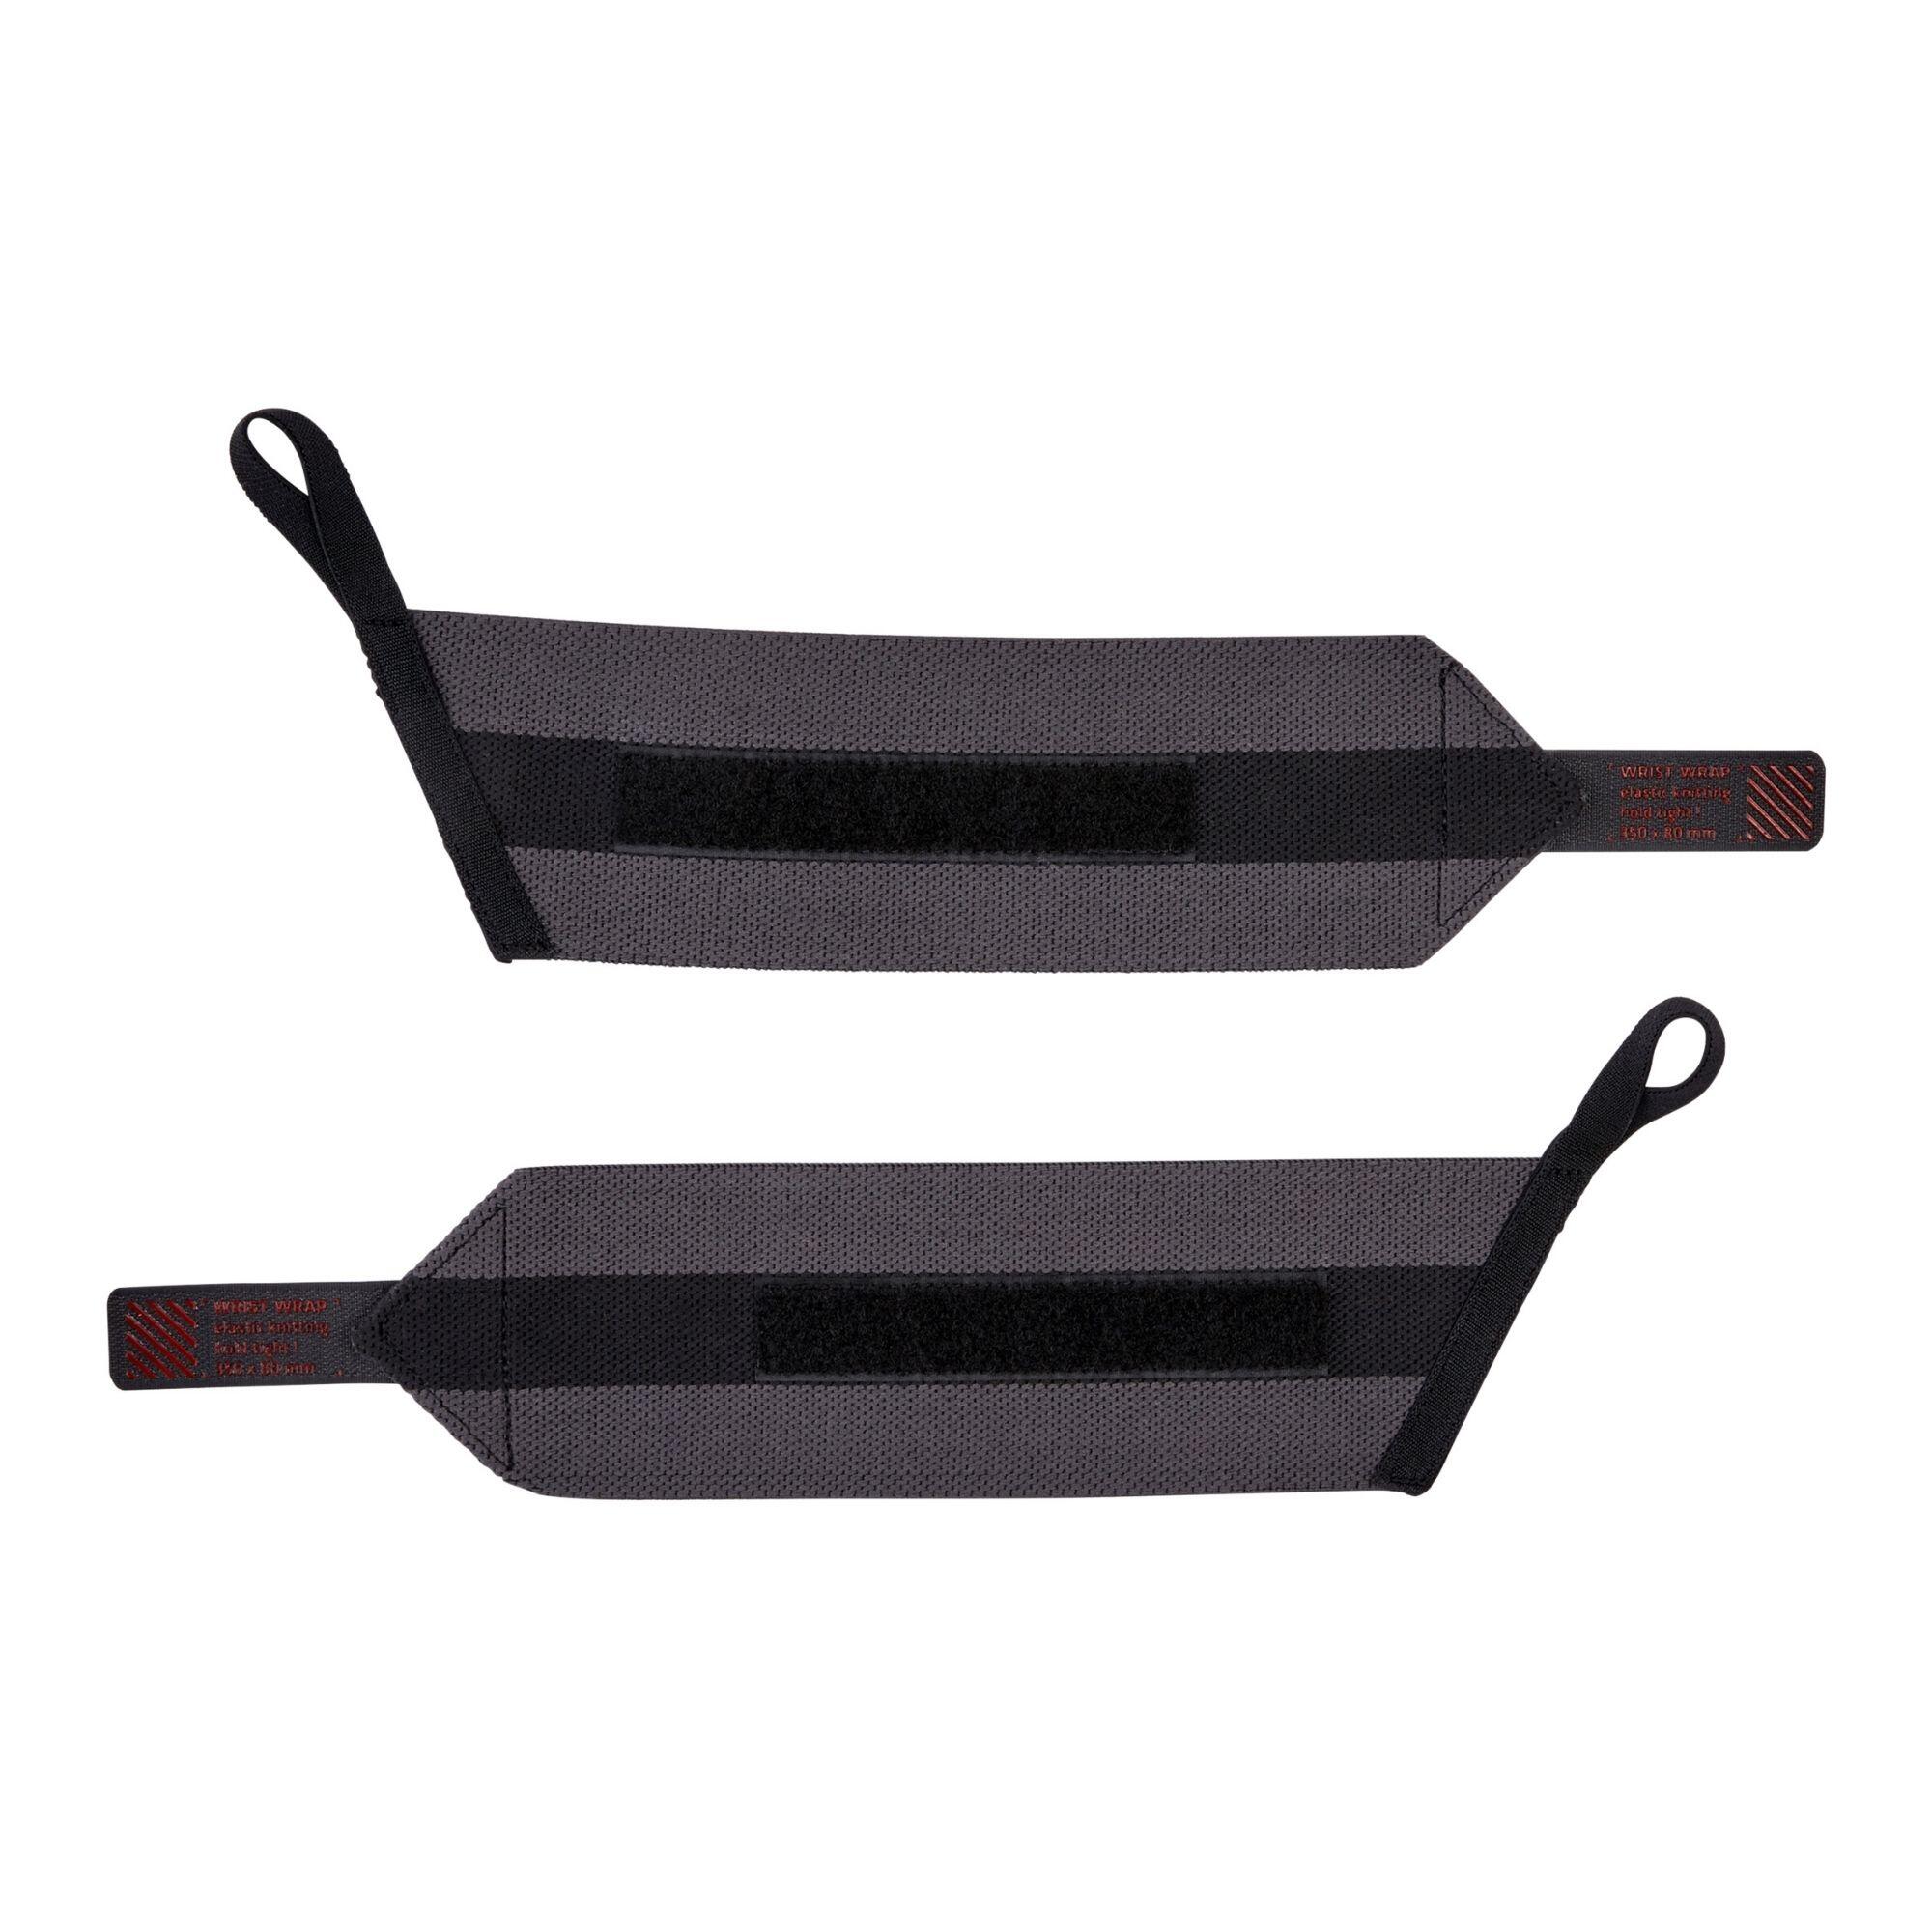 Повязки на запястья Fitness Wristwrap тёмно-серые DOMYOS, углерод серый 12 шт одноразовый бандаж для тату машинки клейкий бандаж бандаж для тату машинки трубка для захвата 2 x5 ярда